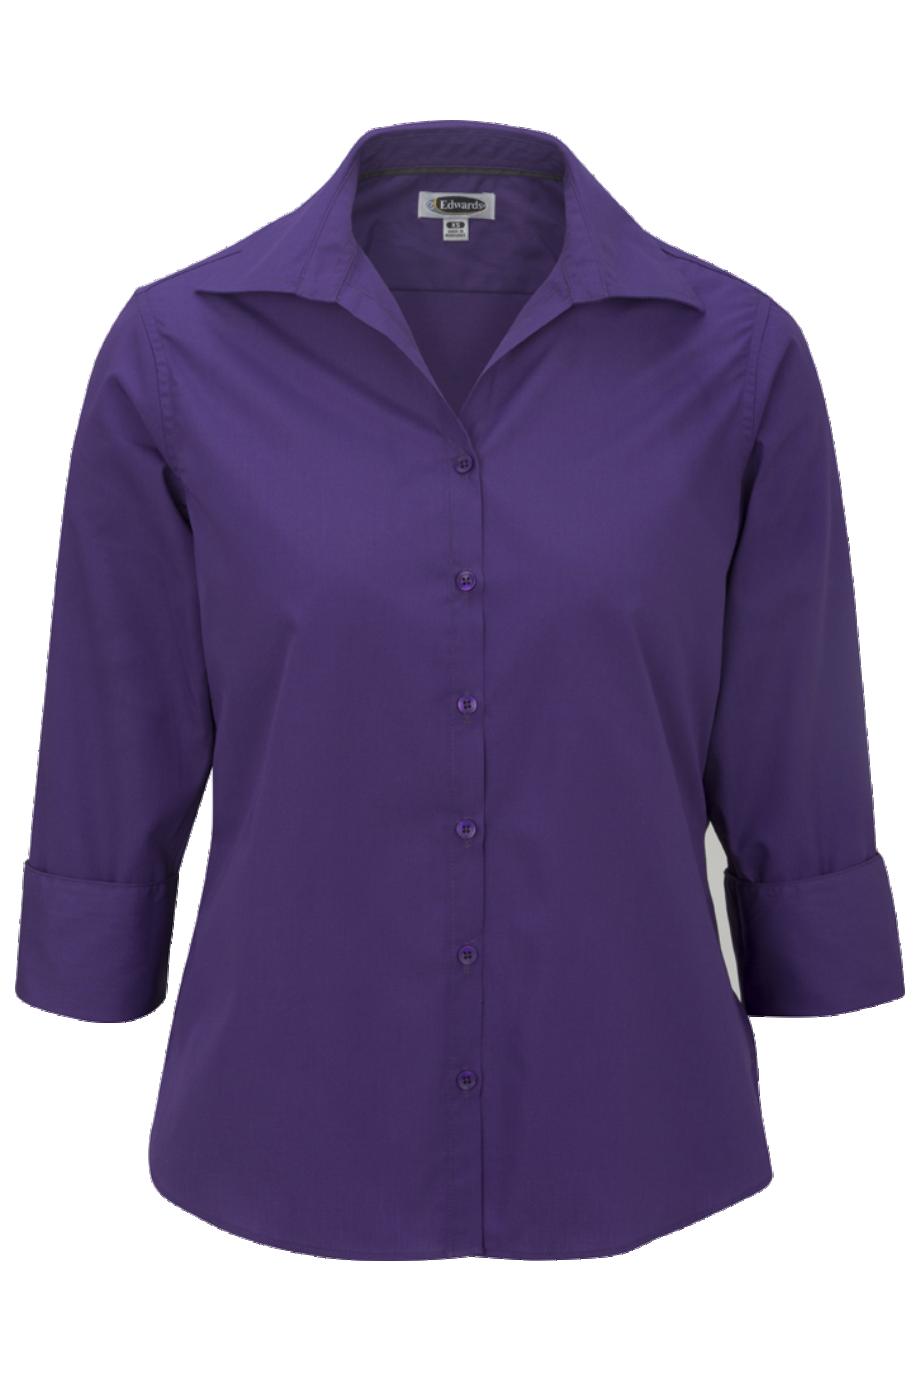 Edwards Garment 5040 - Three Quarter Sleeve Blouse